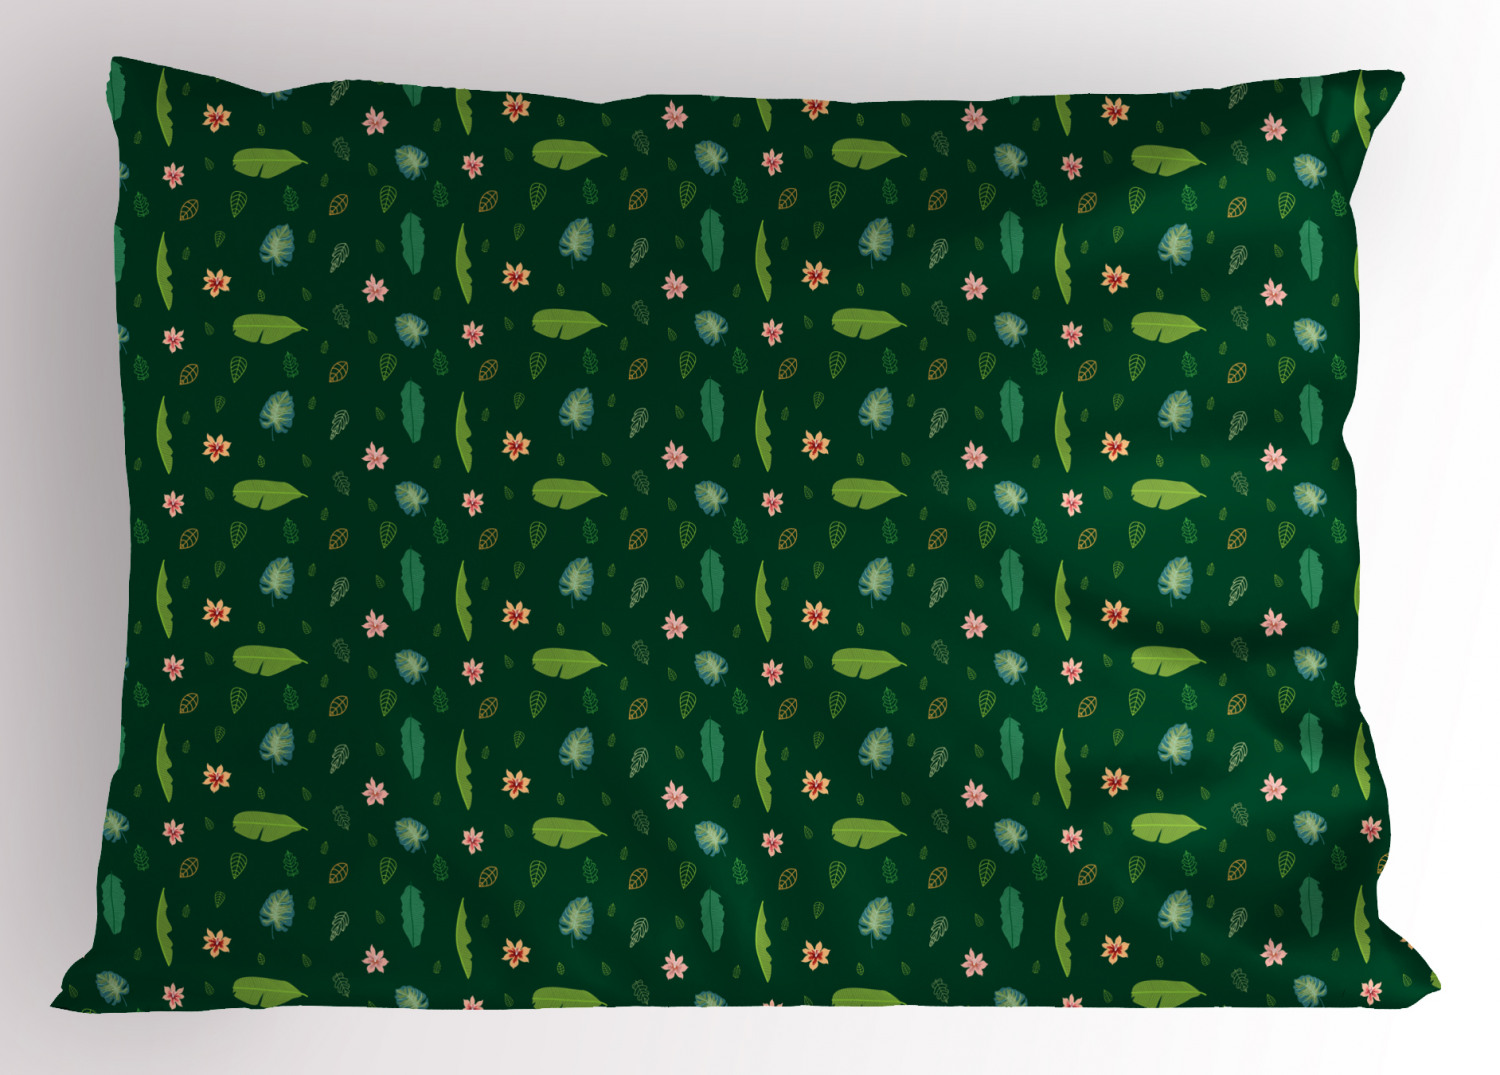 Details about   Colorful Garden Pillow Sham Decorative Pillowcase 3 Sizes for Bedroom Decor 